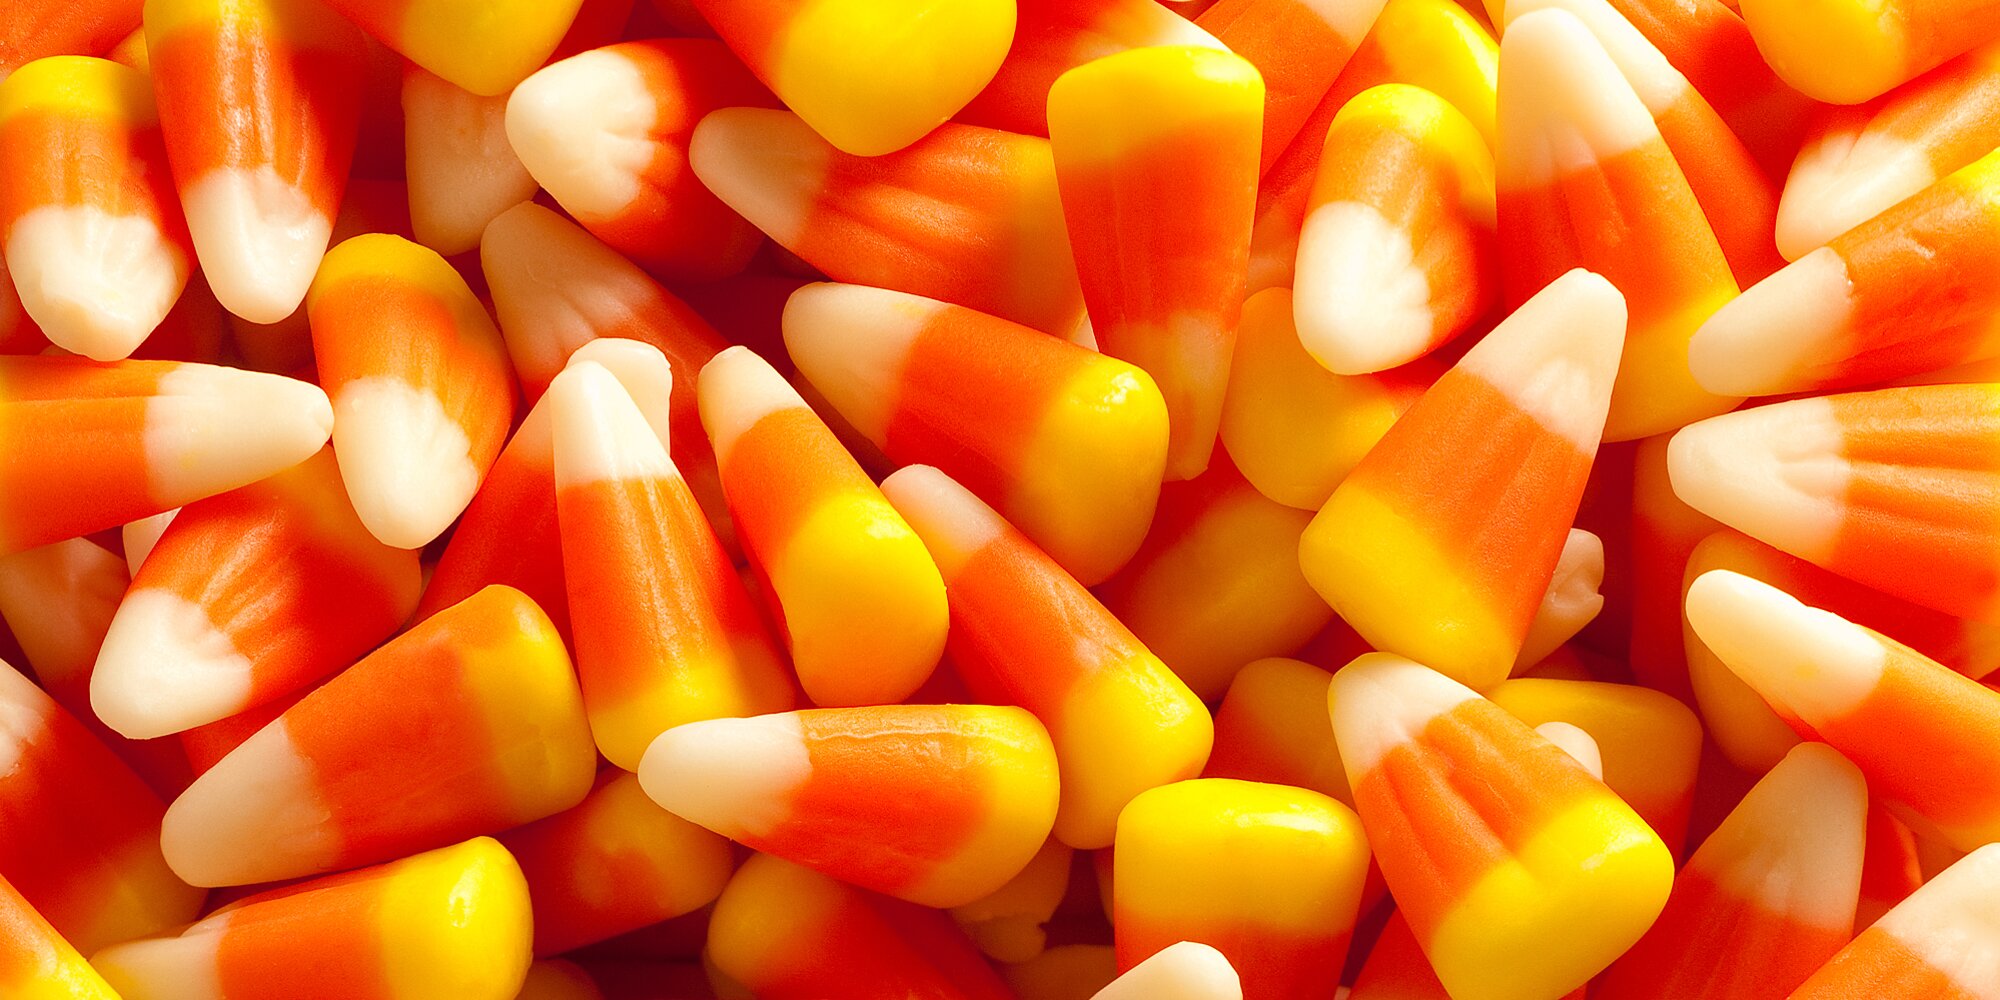 Candy Corn Is the Most Polarizing Halloween Treat. Food & Wine